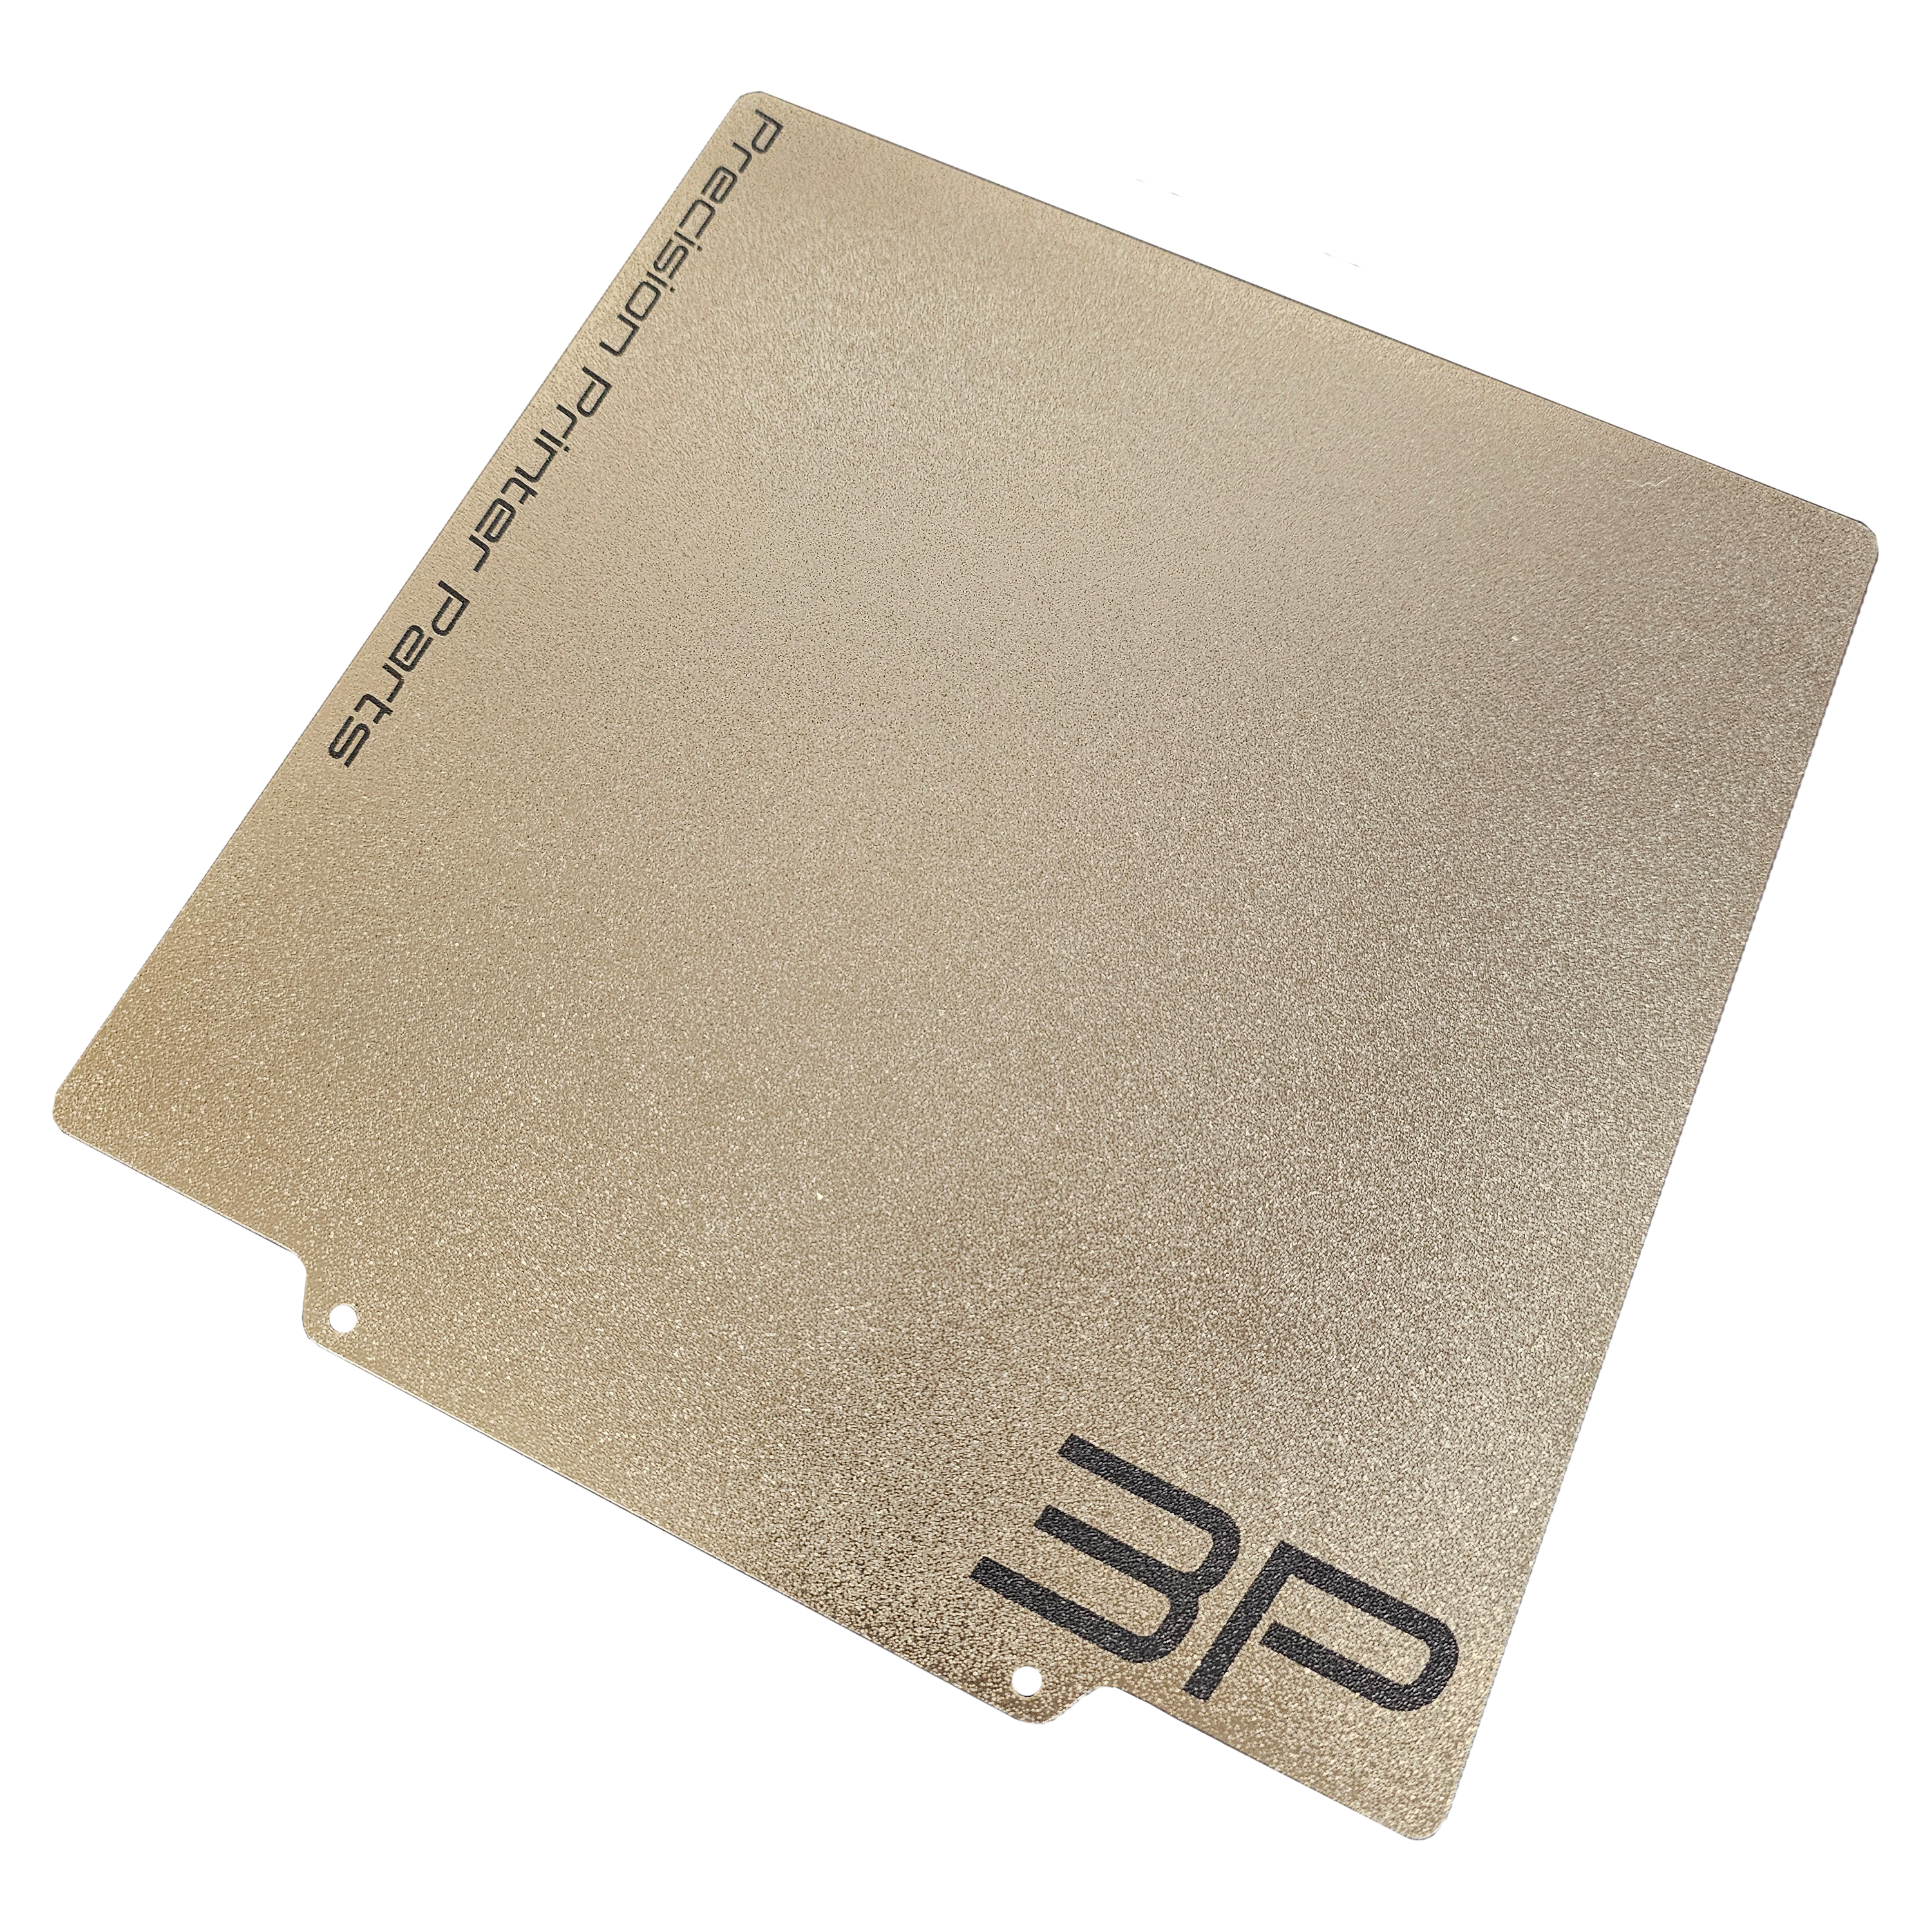 Dauerdruckplatte Druckbett PEI Magnet Base Federstahl Anycubic Chiron Kobra MAX